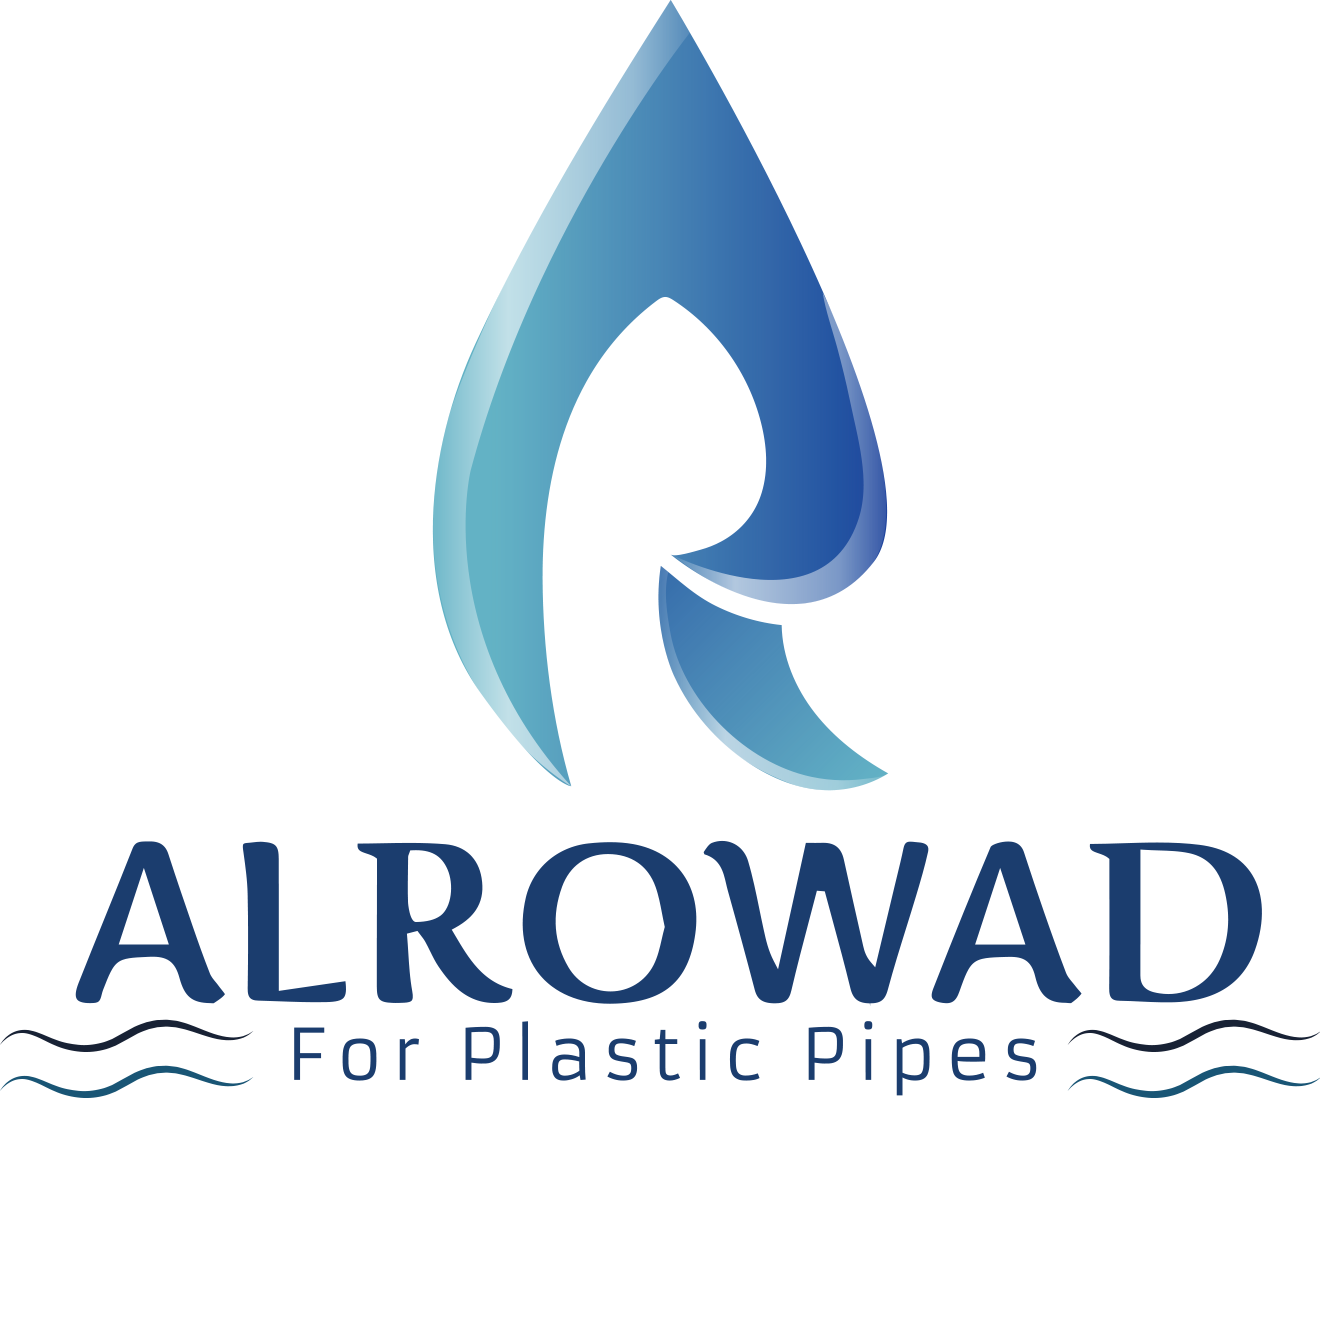 Alrowad pipes